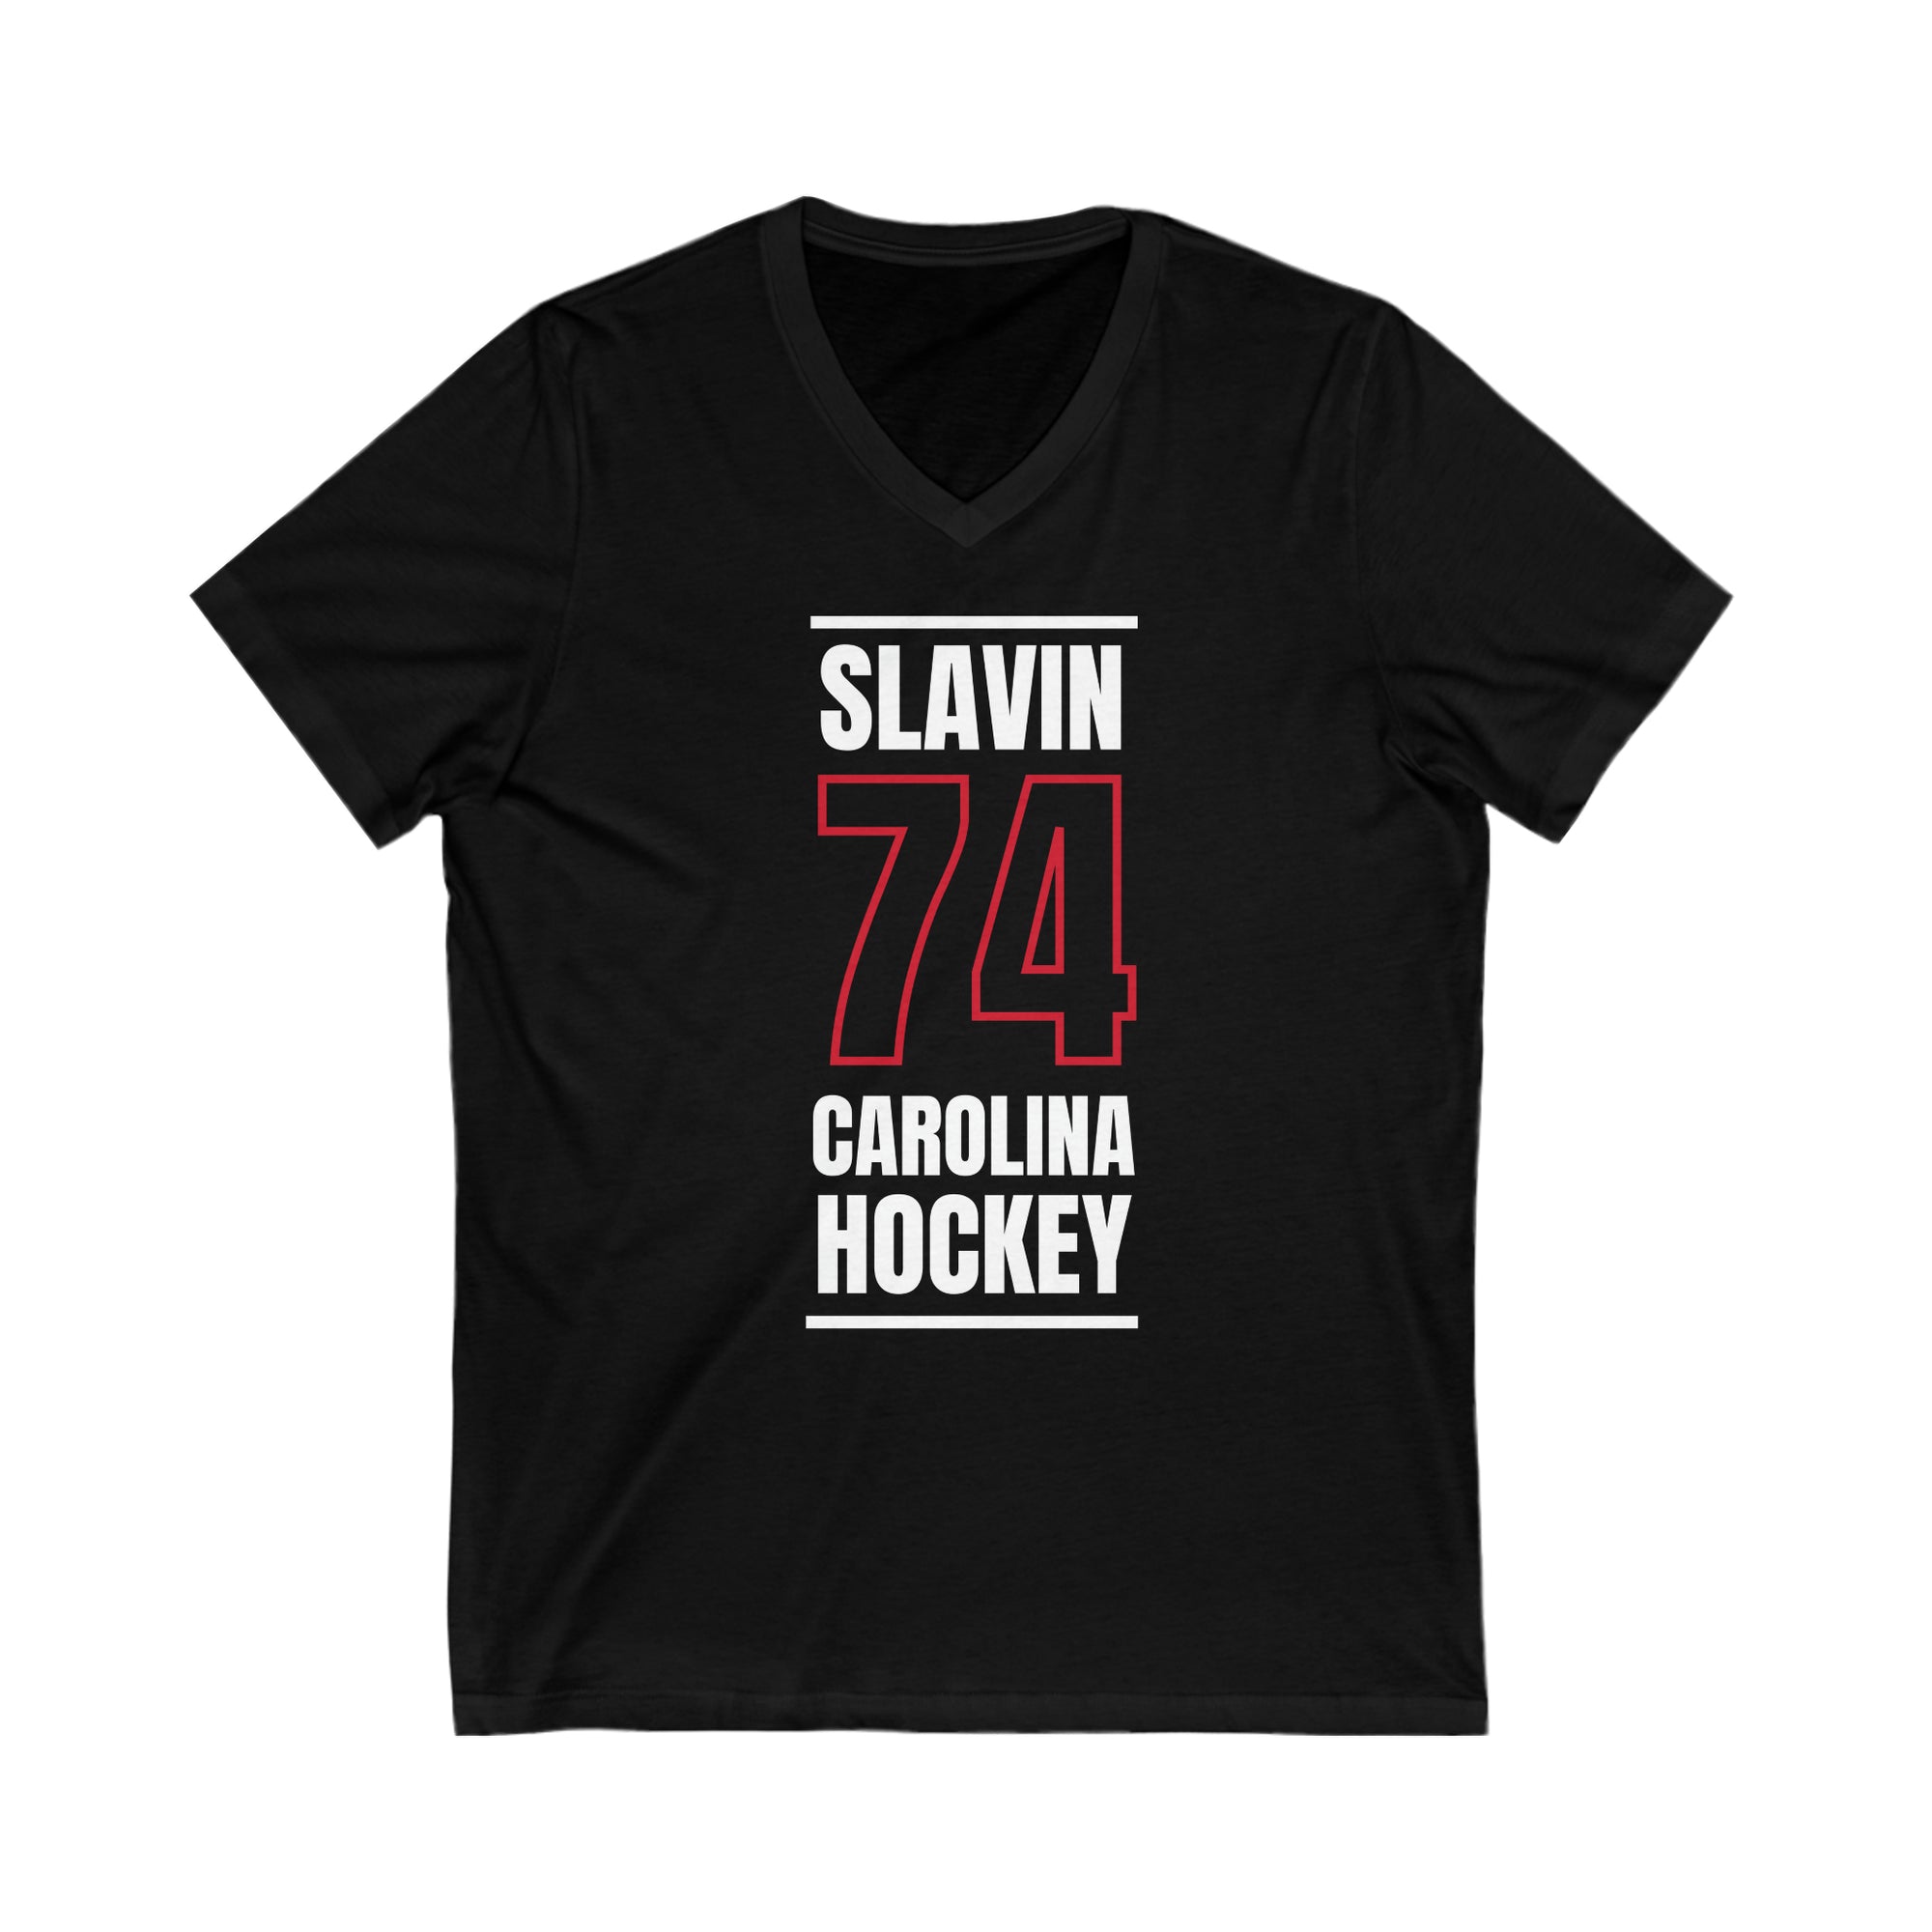 Slavin 74 Carolina Hockey Black Vertical Design Unisex V-Neck Tee